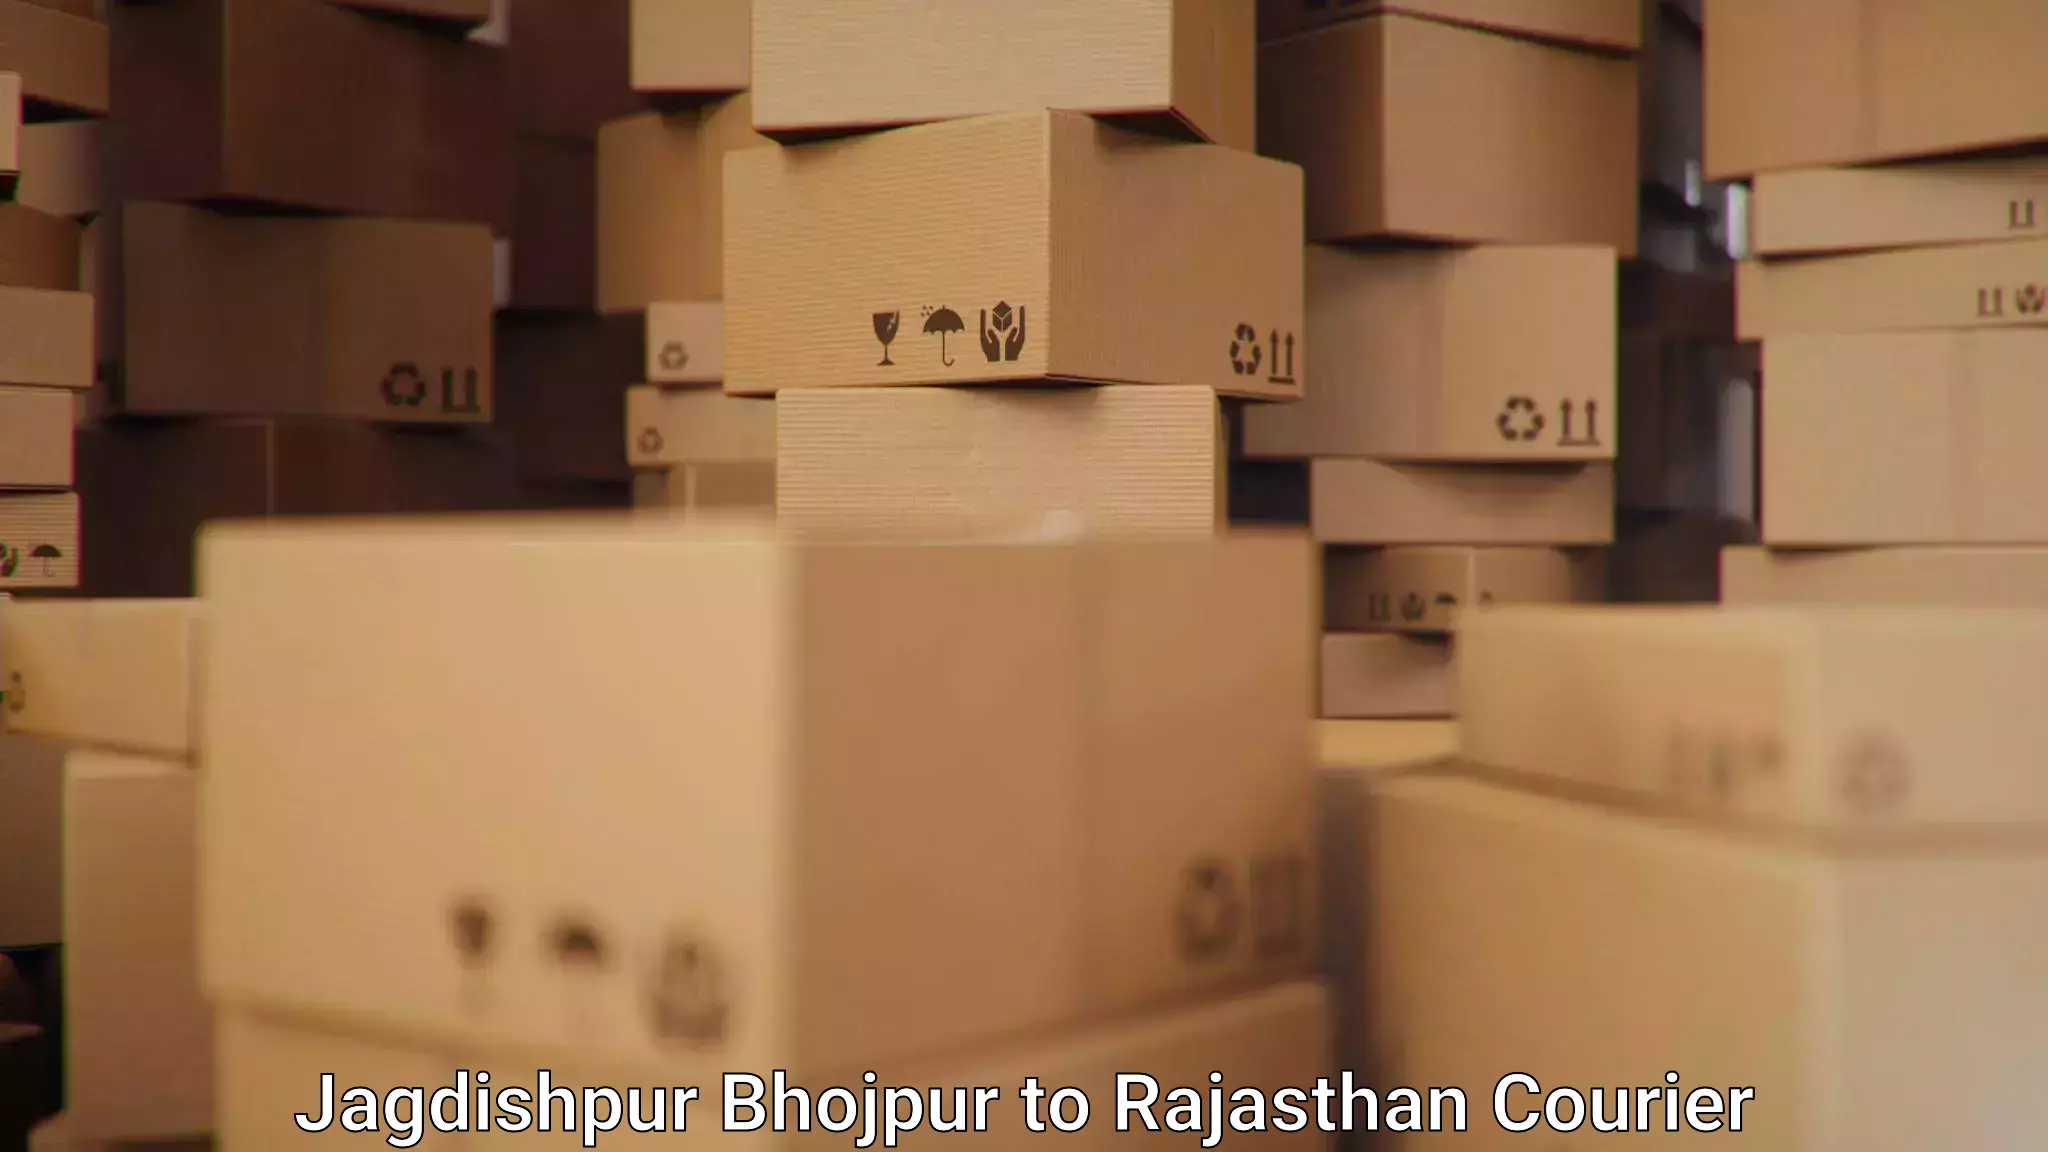 Urgent courier needs Jagdishpur Bhojpur to Sri Ganganagar